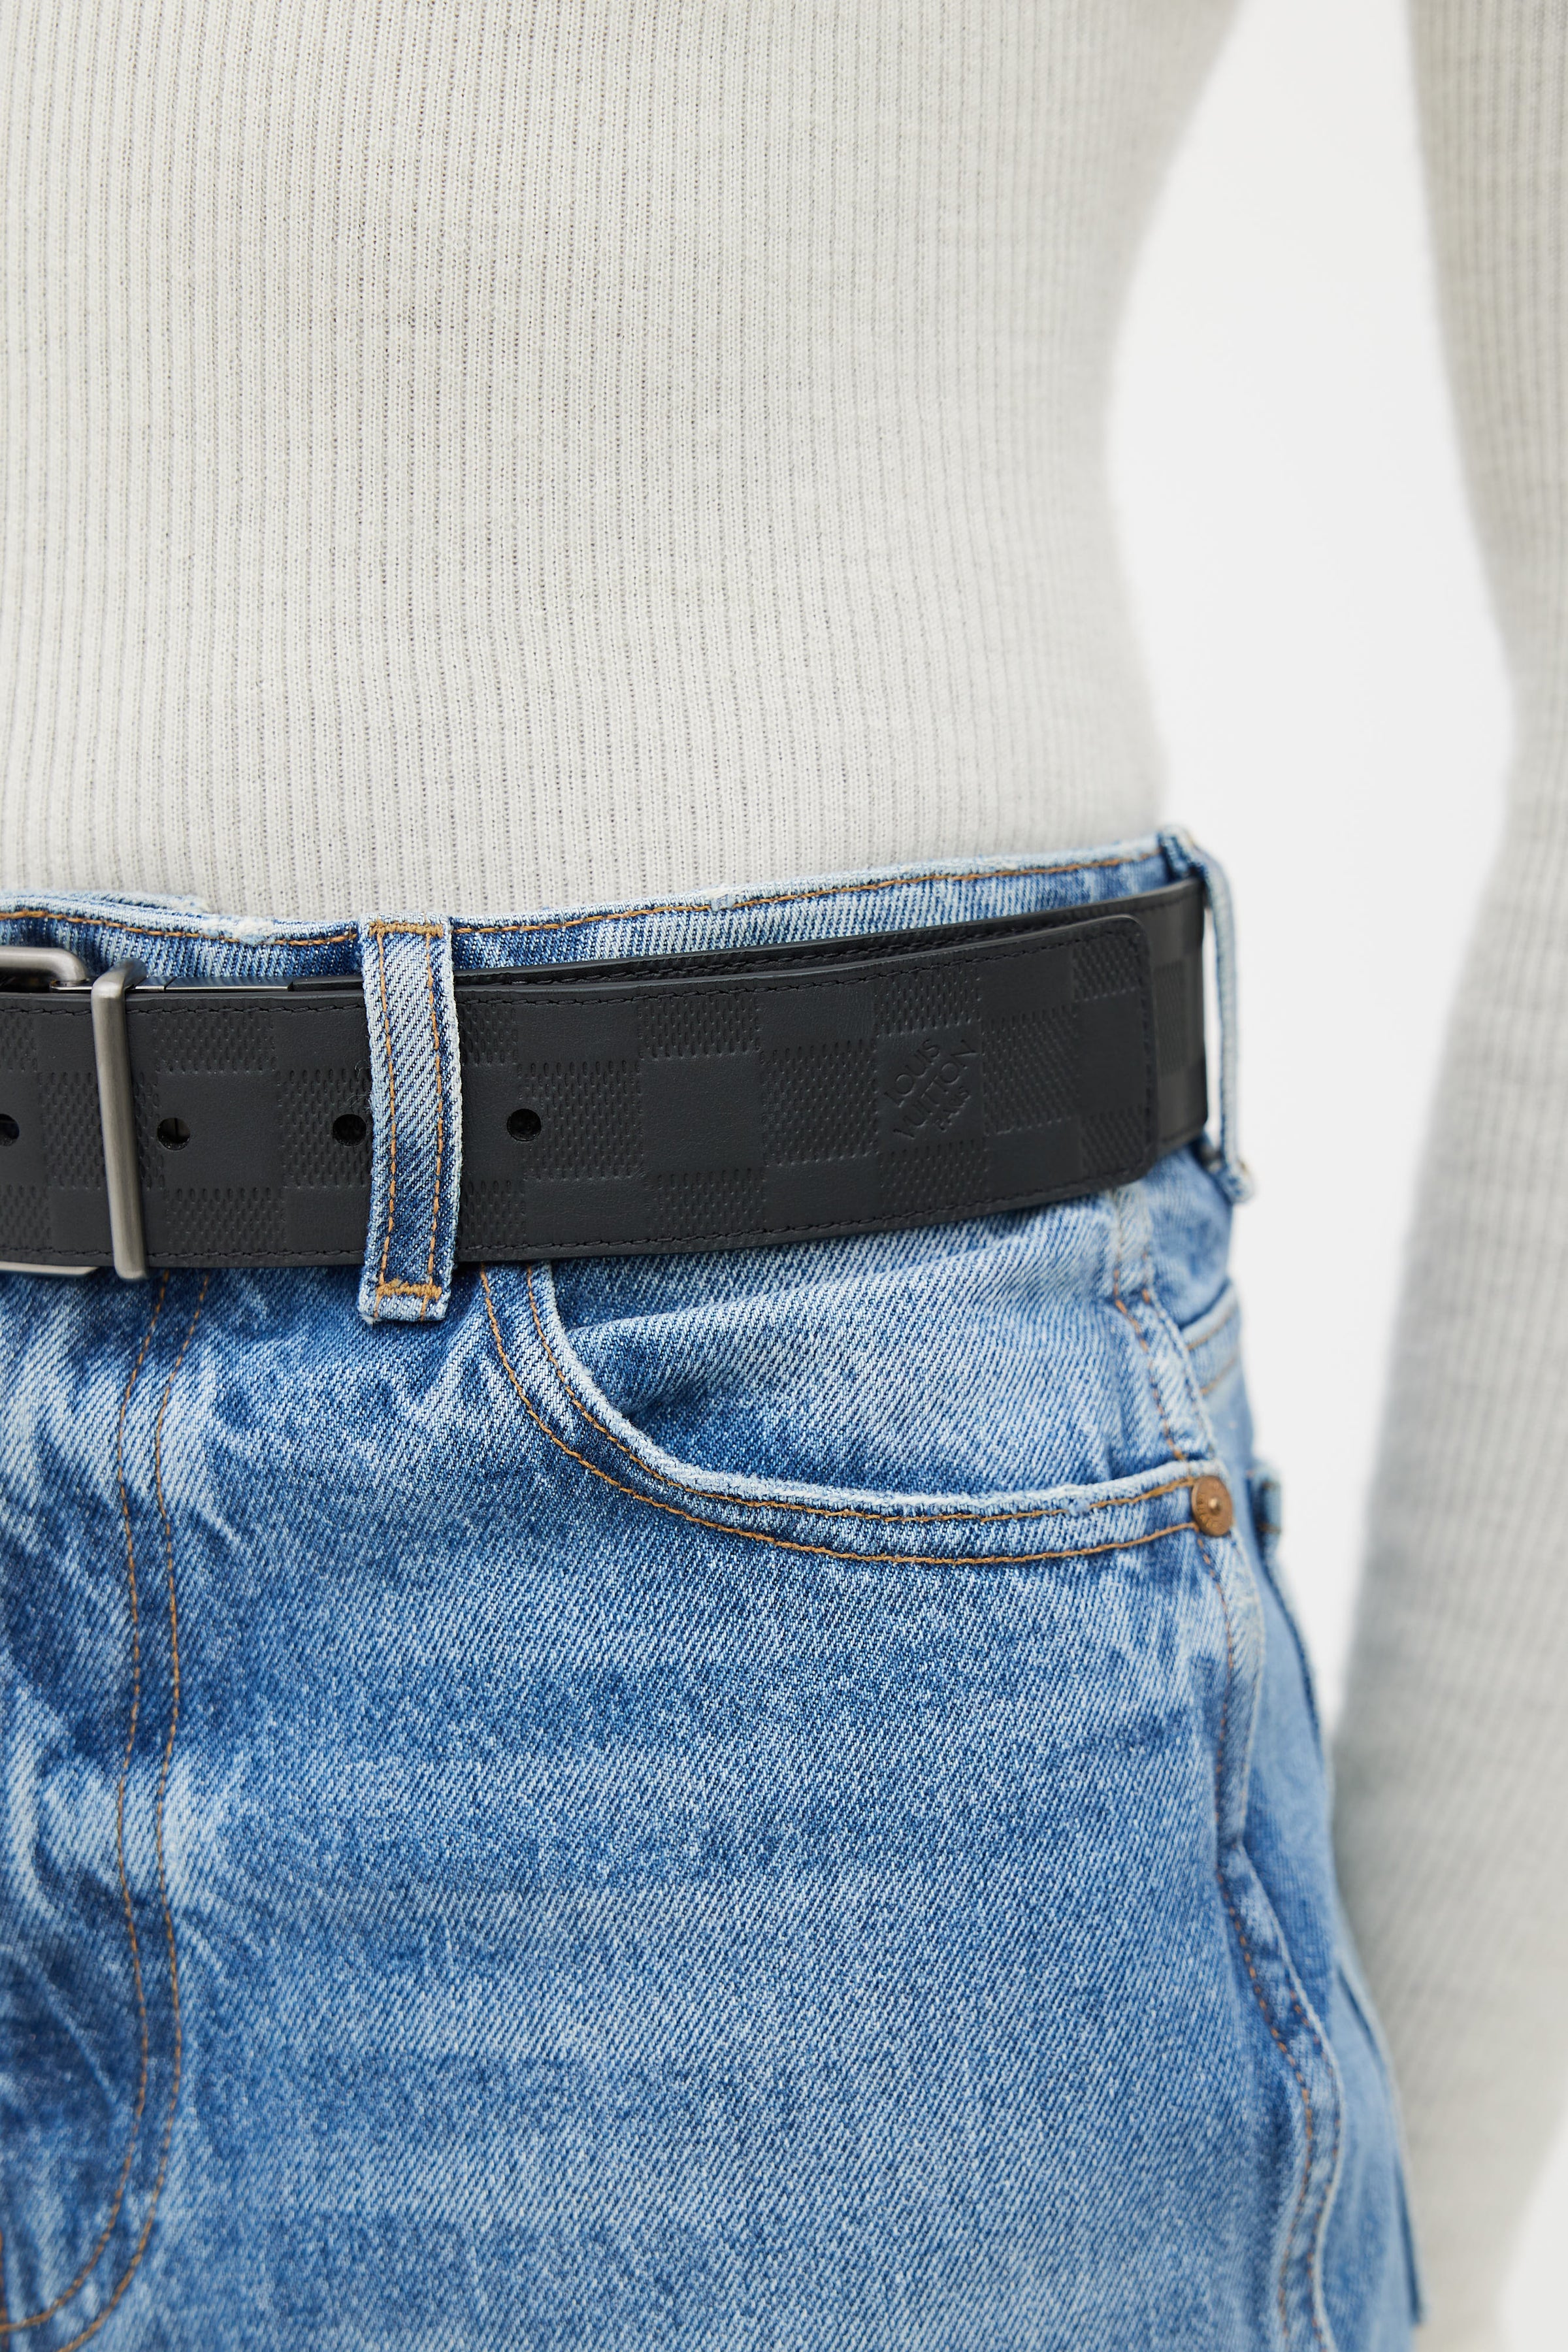 Louis Vuitton Damier Embossed Leather Buckle Belt